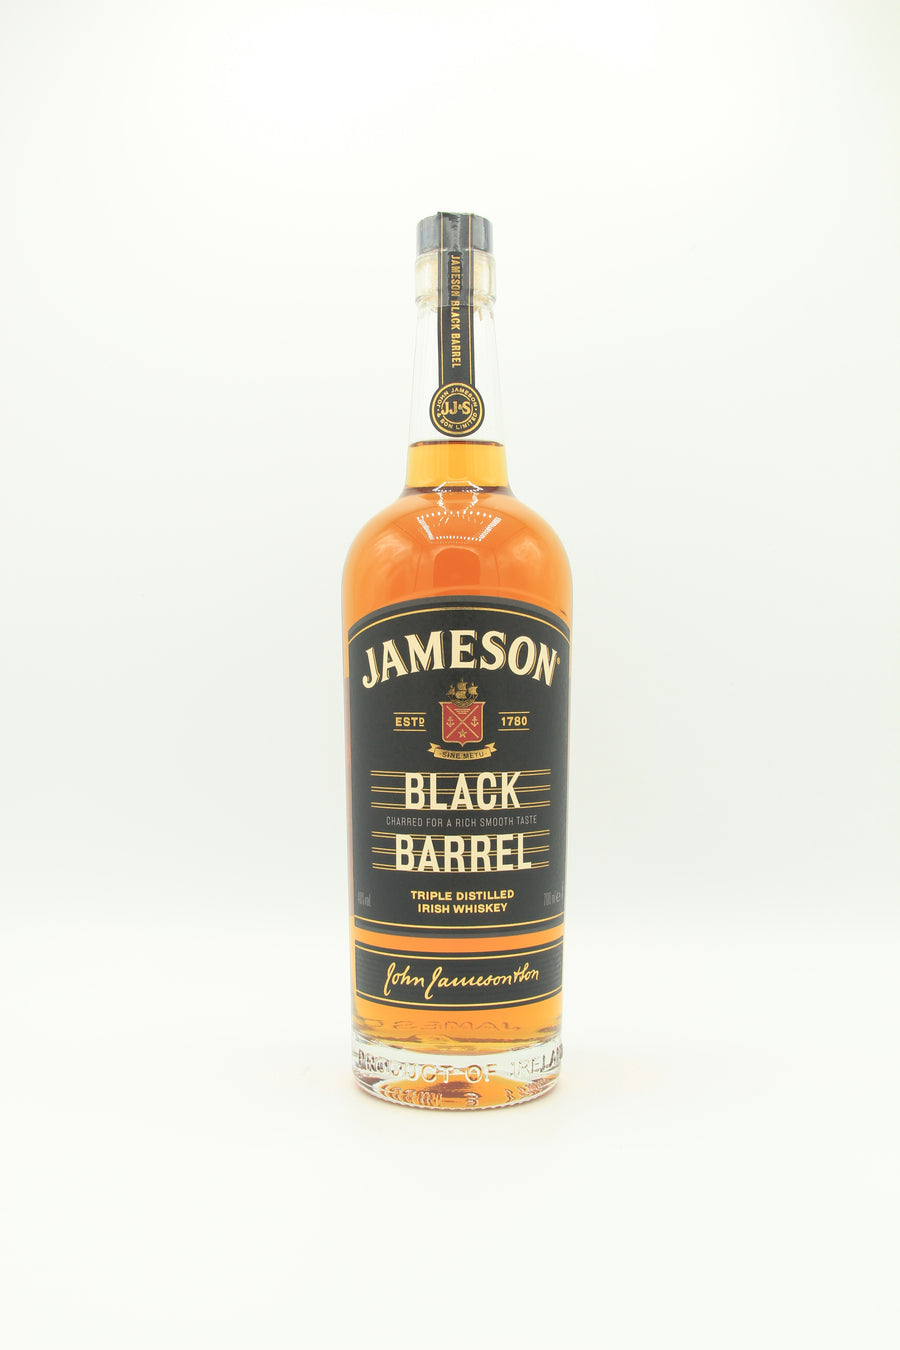 Jameson Black Barrel, Blend, Ireland